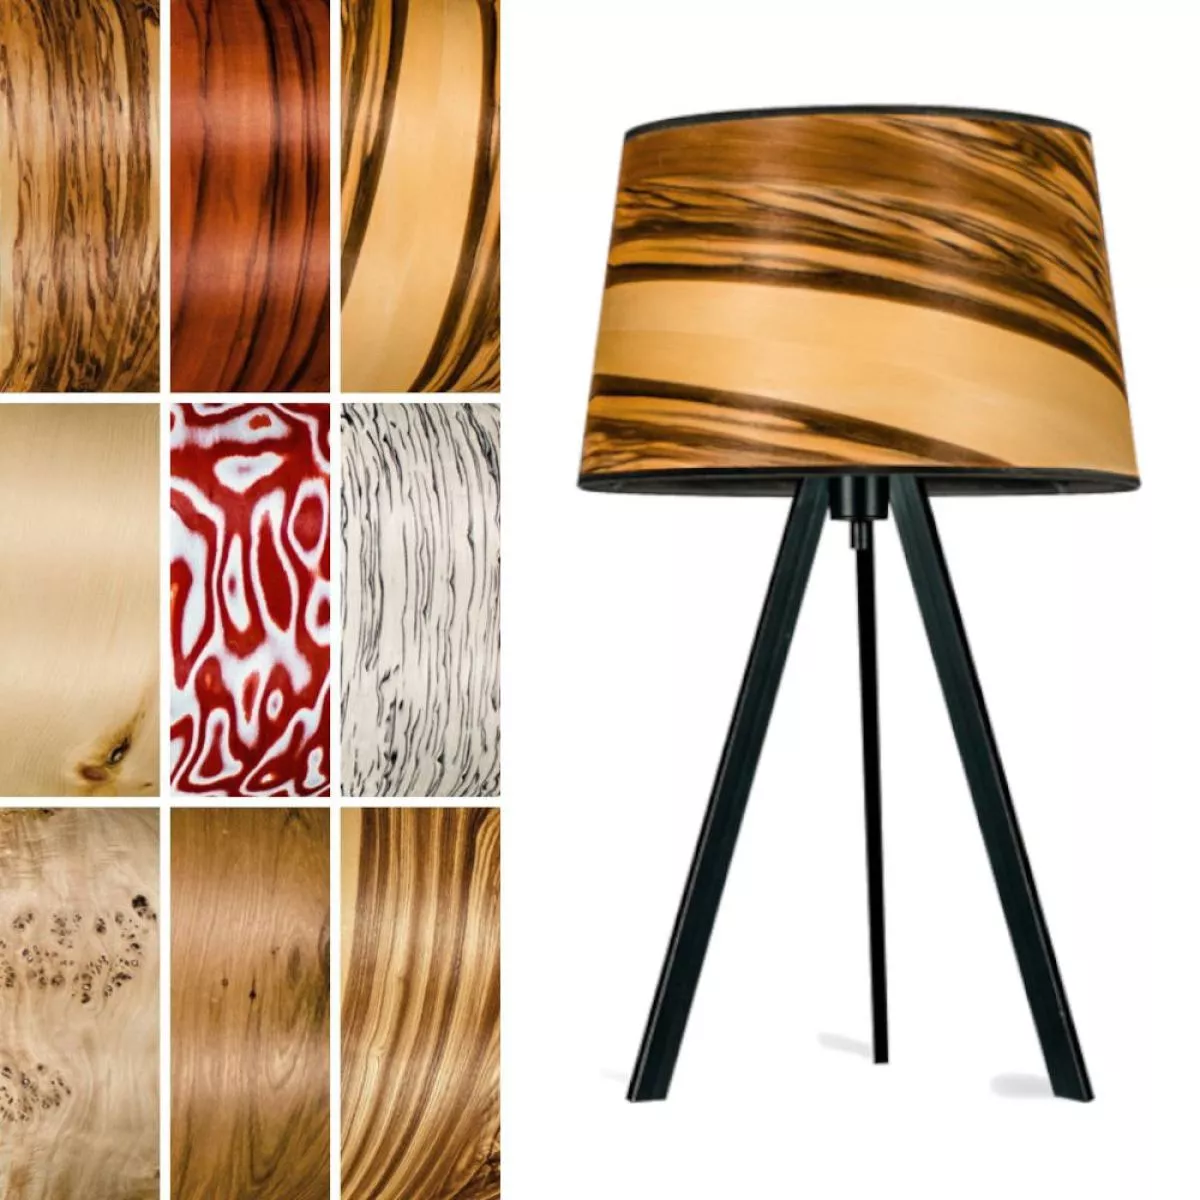 Three-Legged Design Table Lamp with Natural Wood Veneer Shade